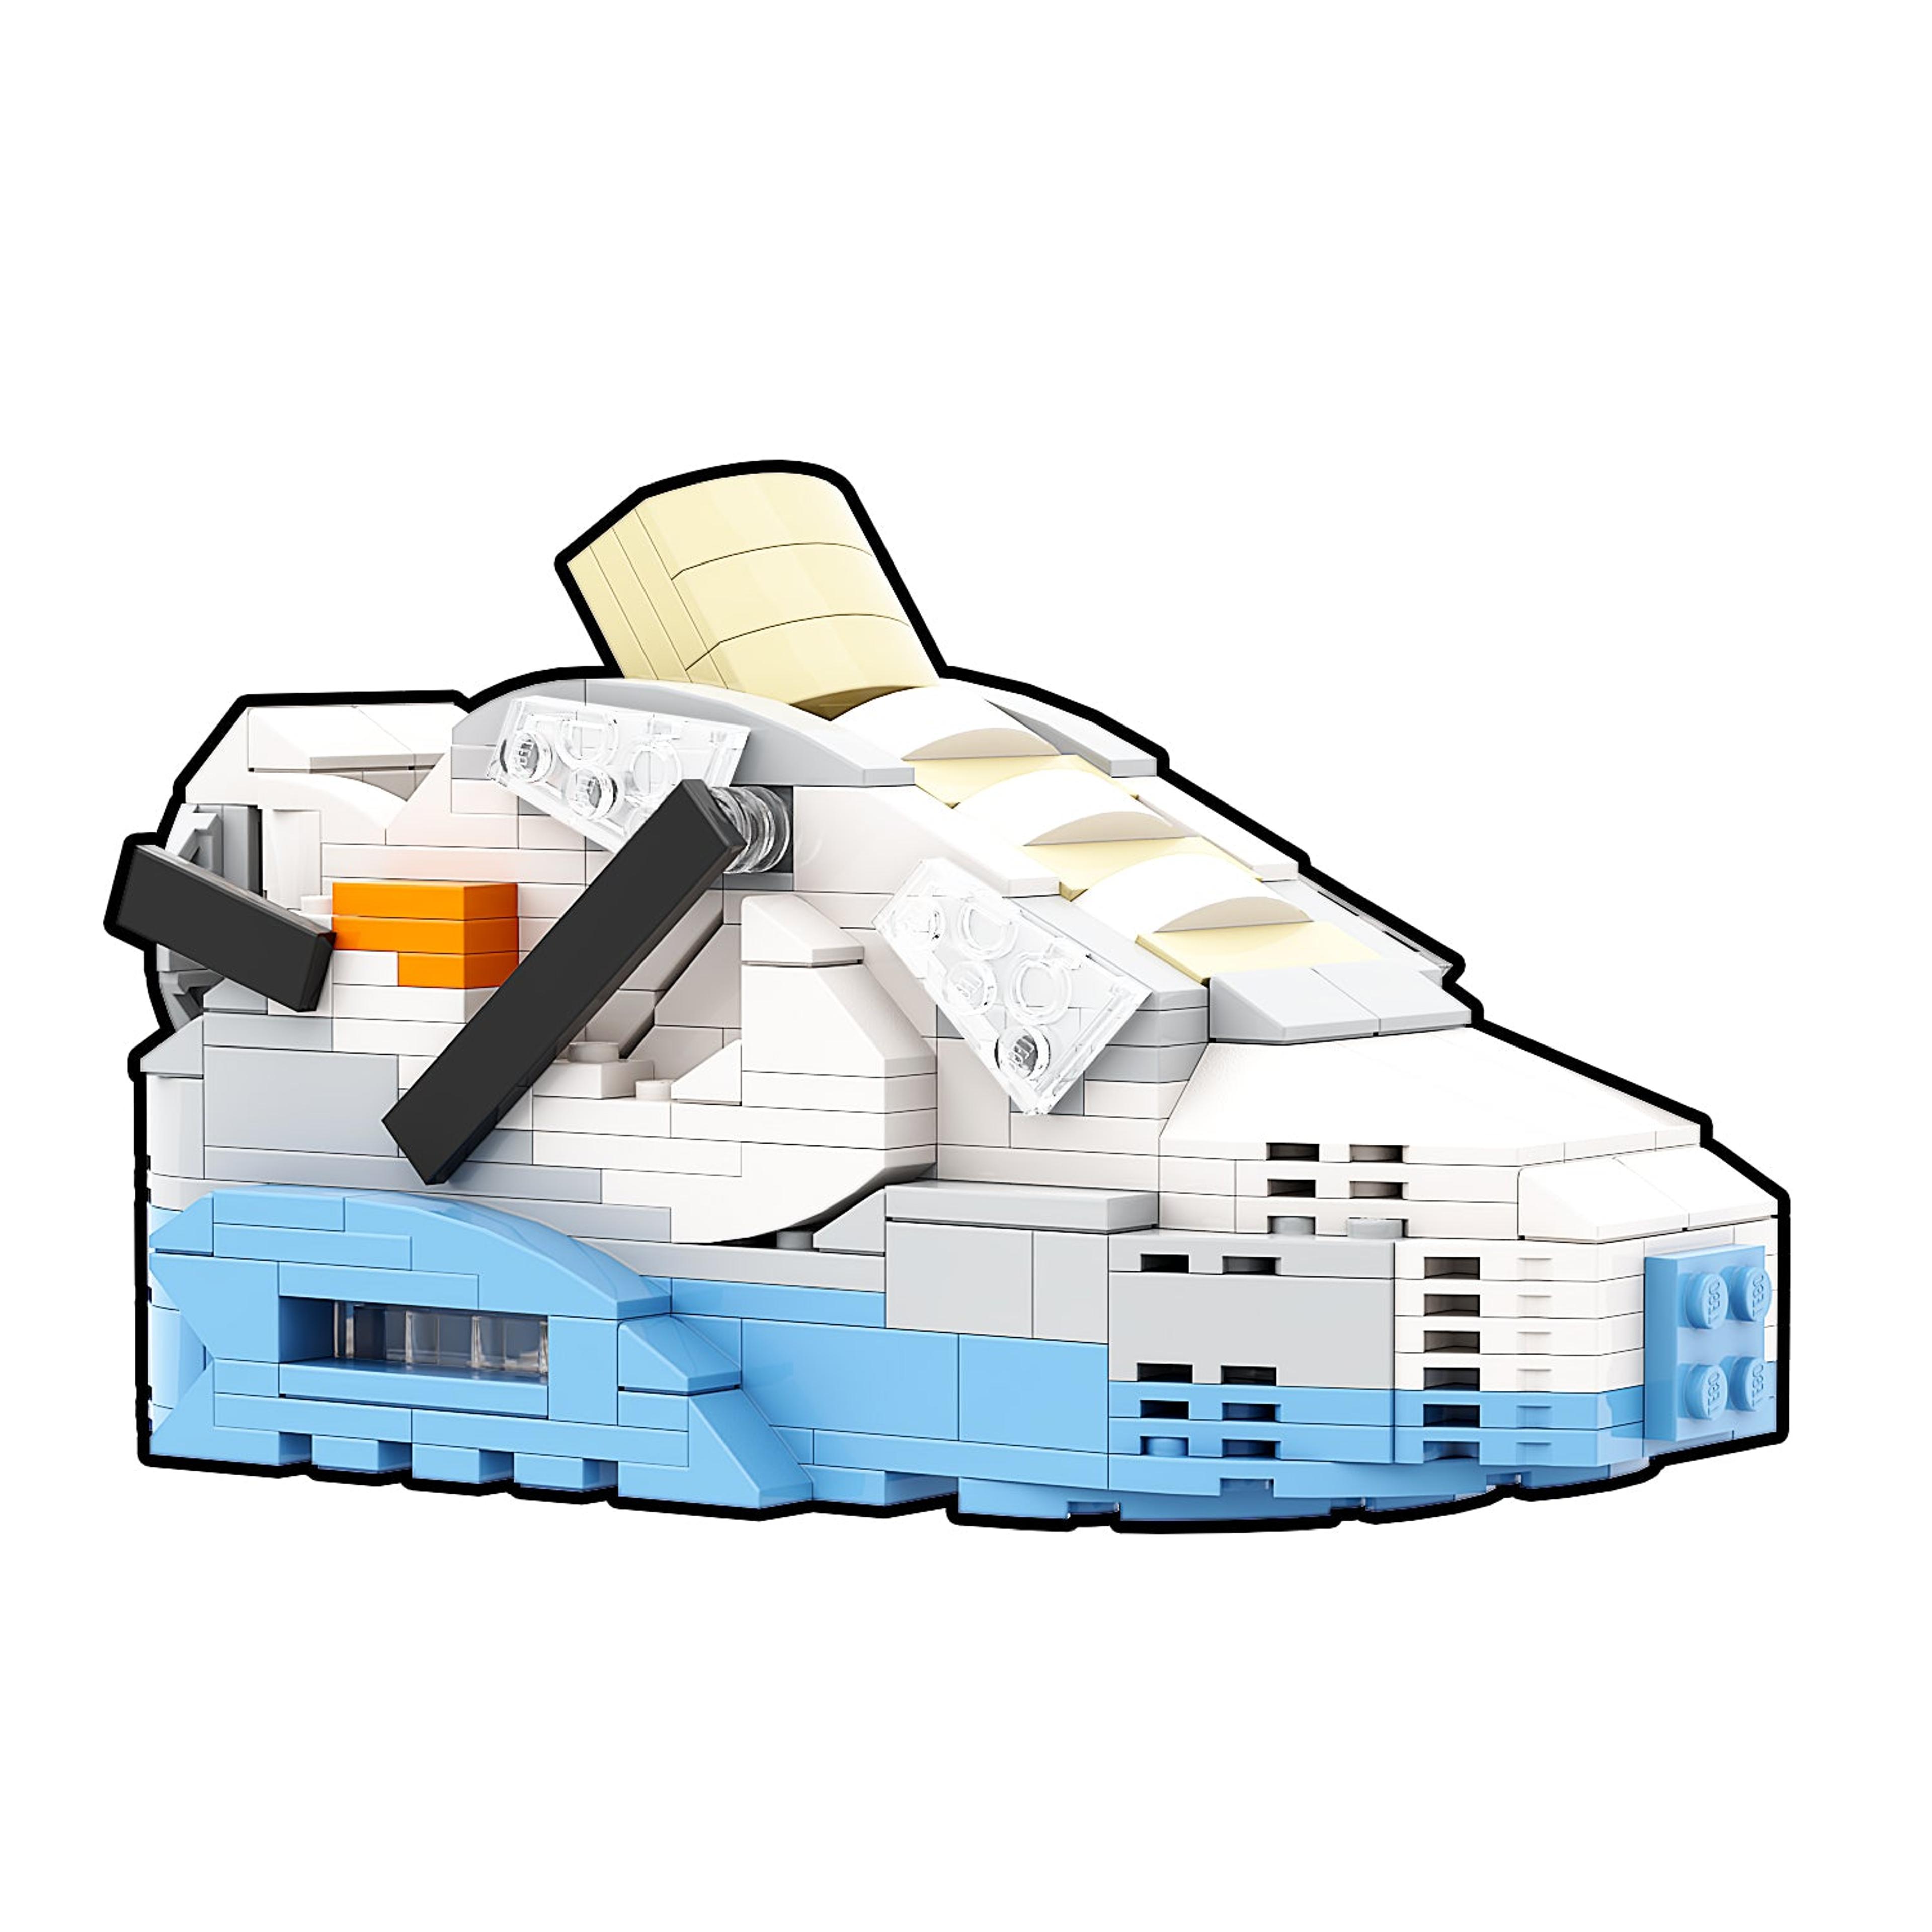 Alternate View 6 of REGULAR Air Max 90 "Off-White White" Sneaker Bricks with Mini Fi